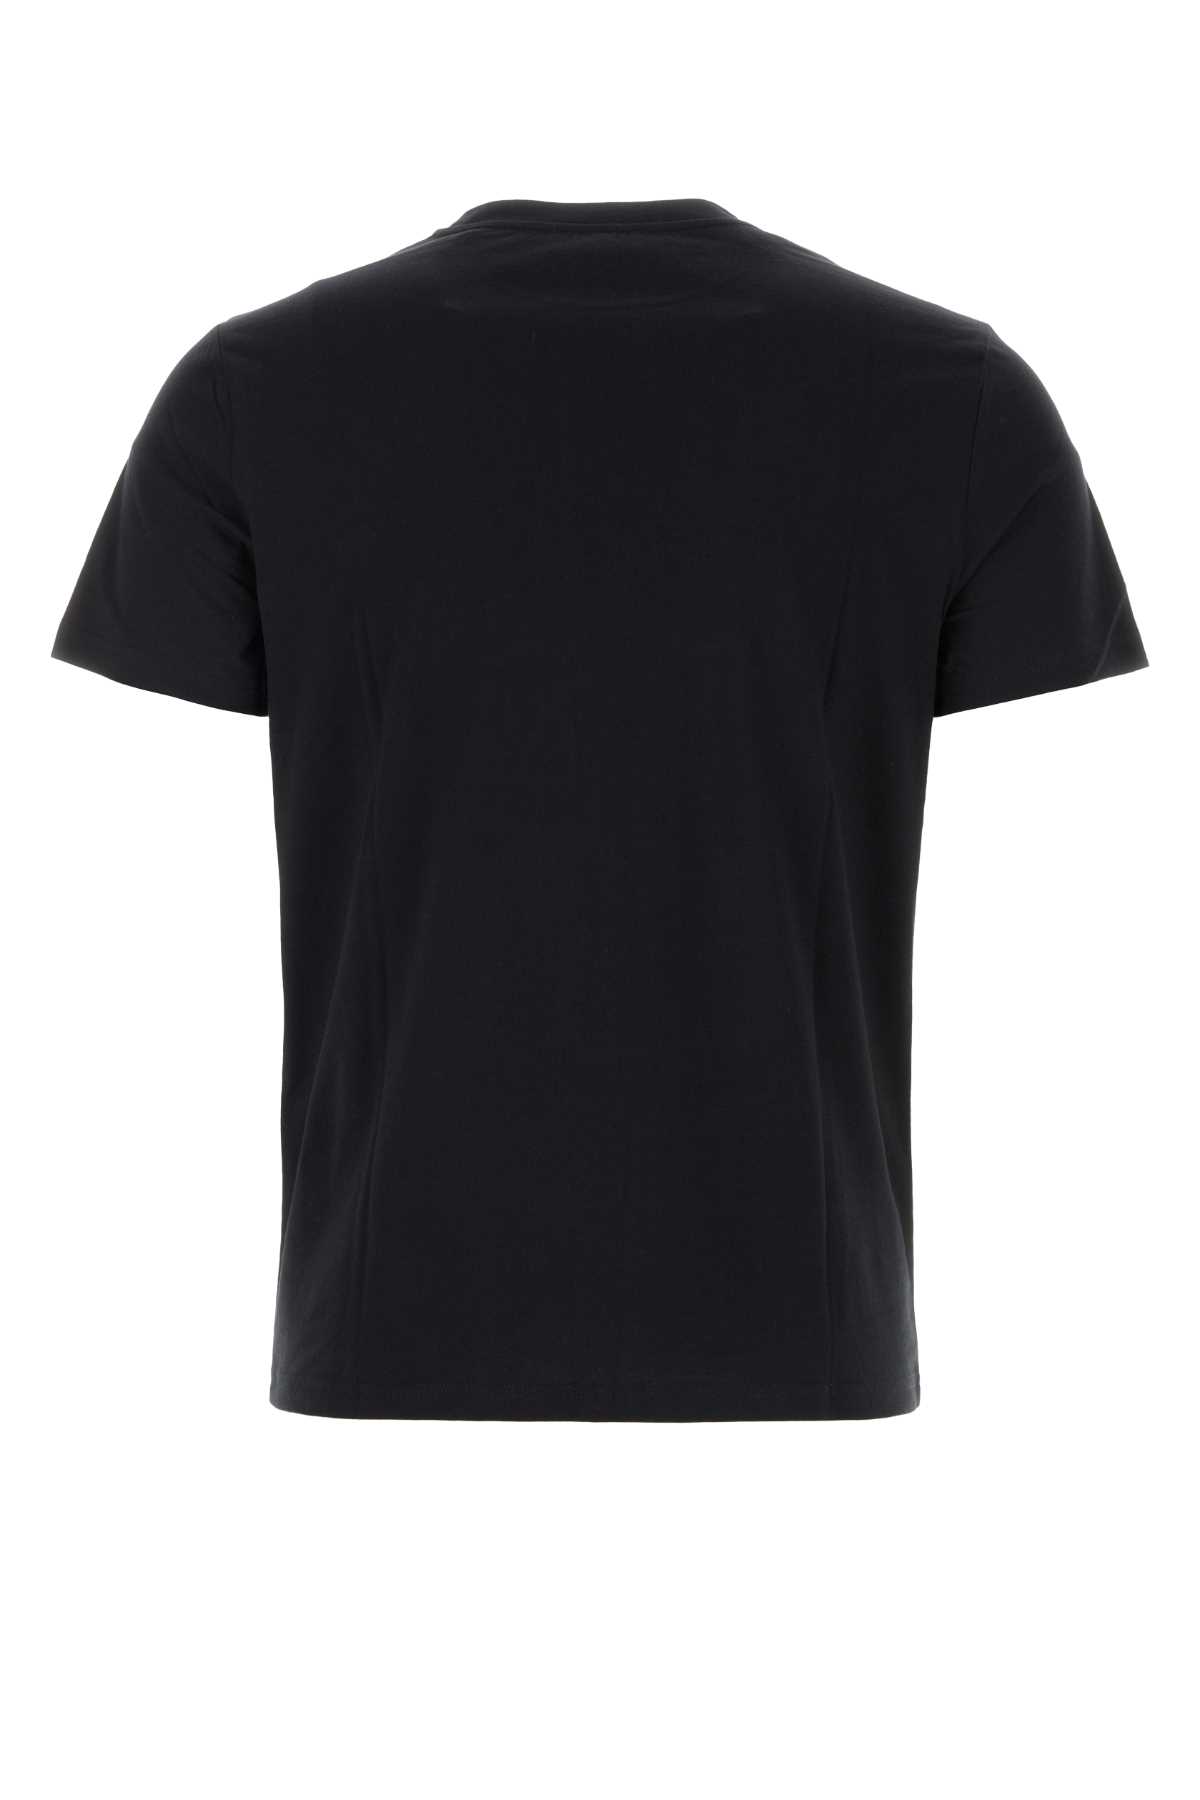 Apc Black Cotton Item T-shirt